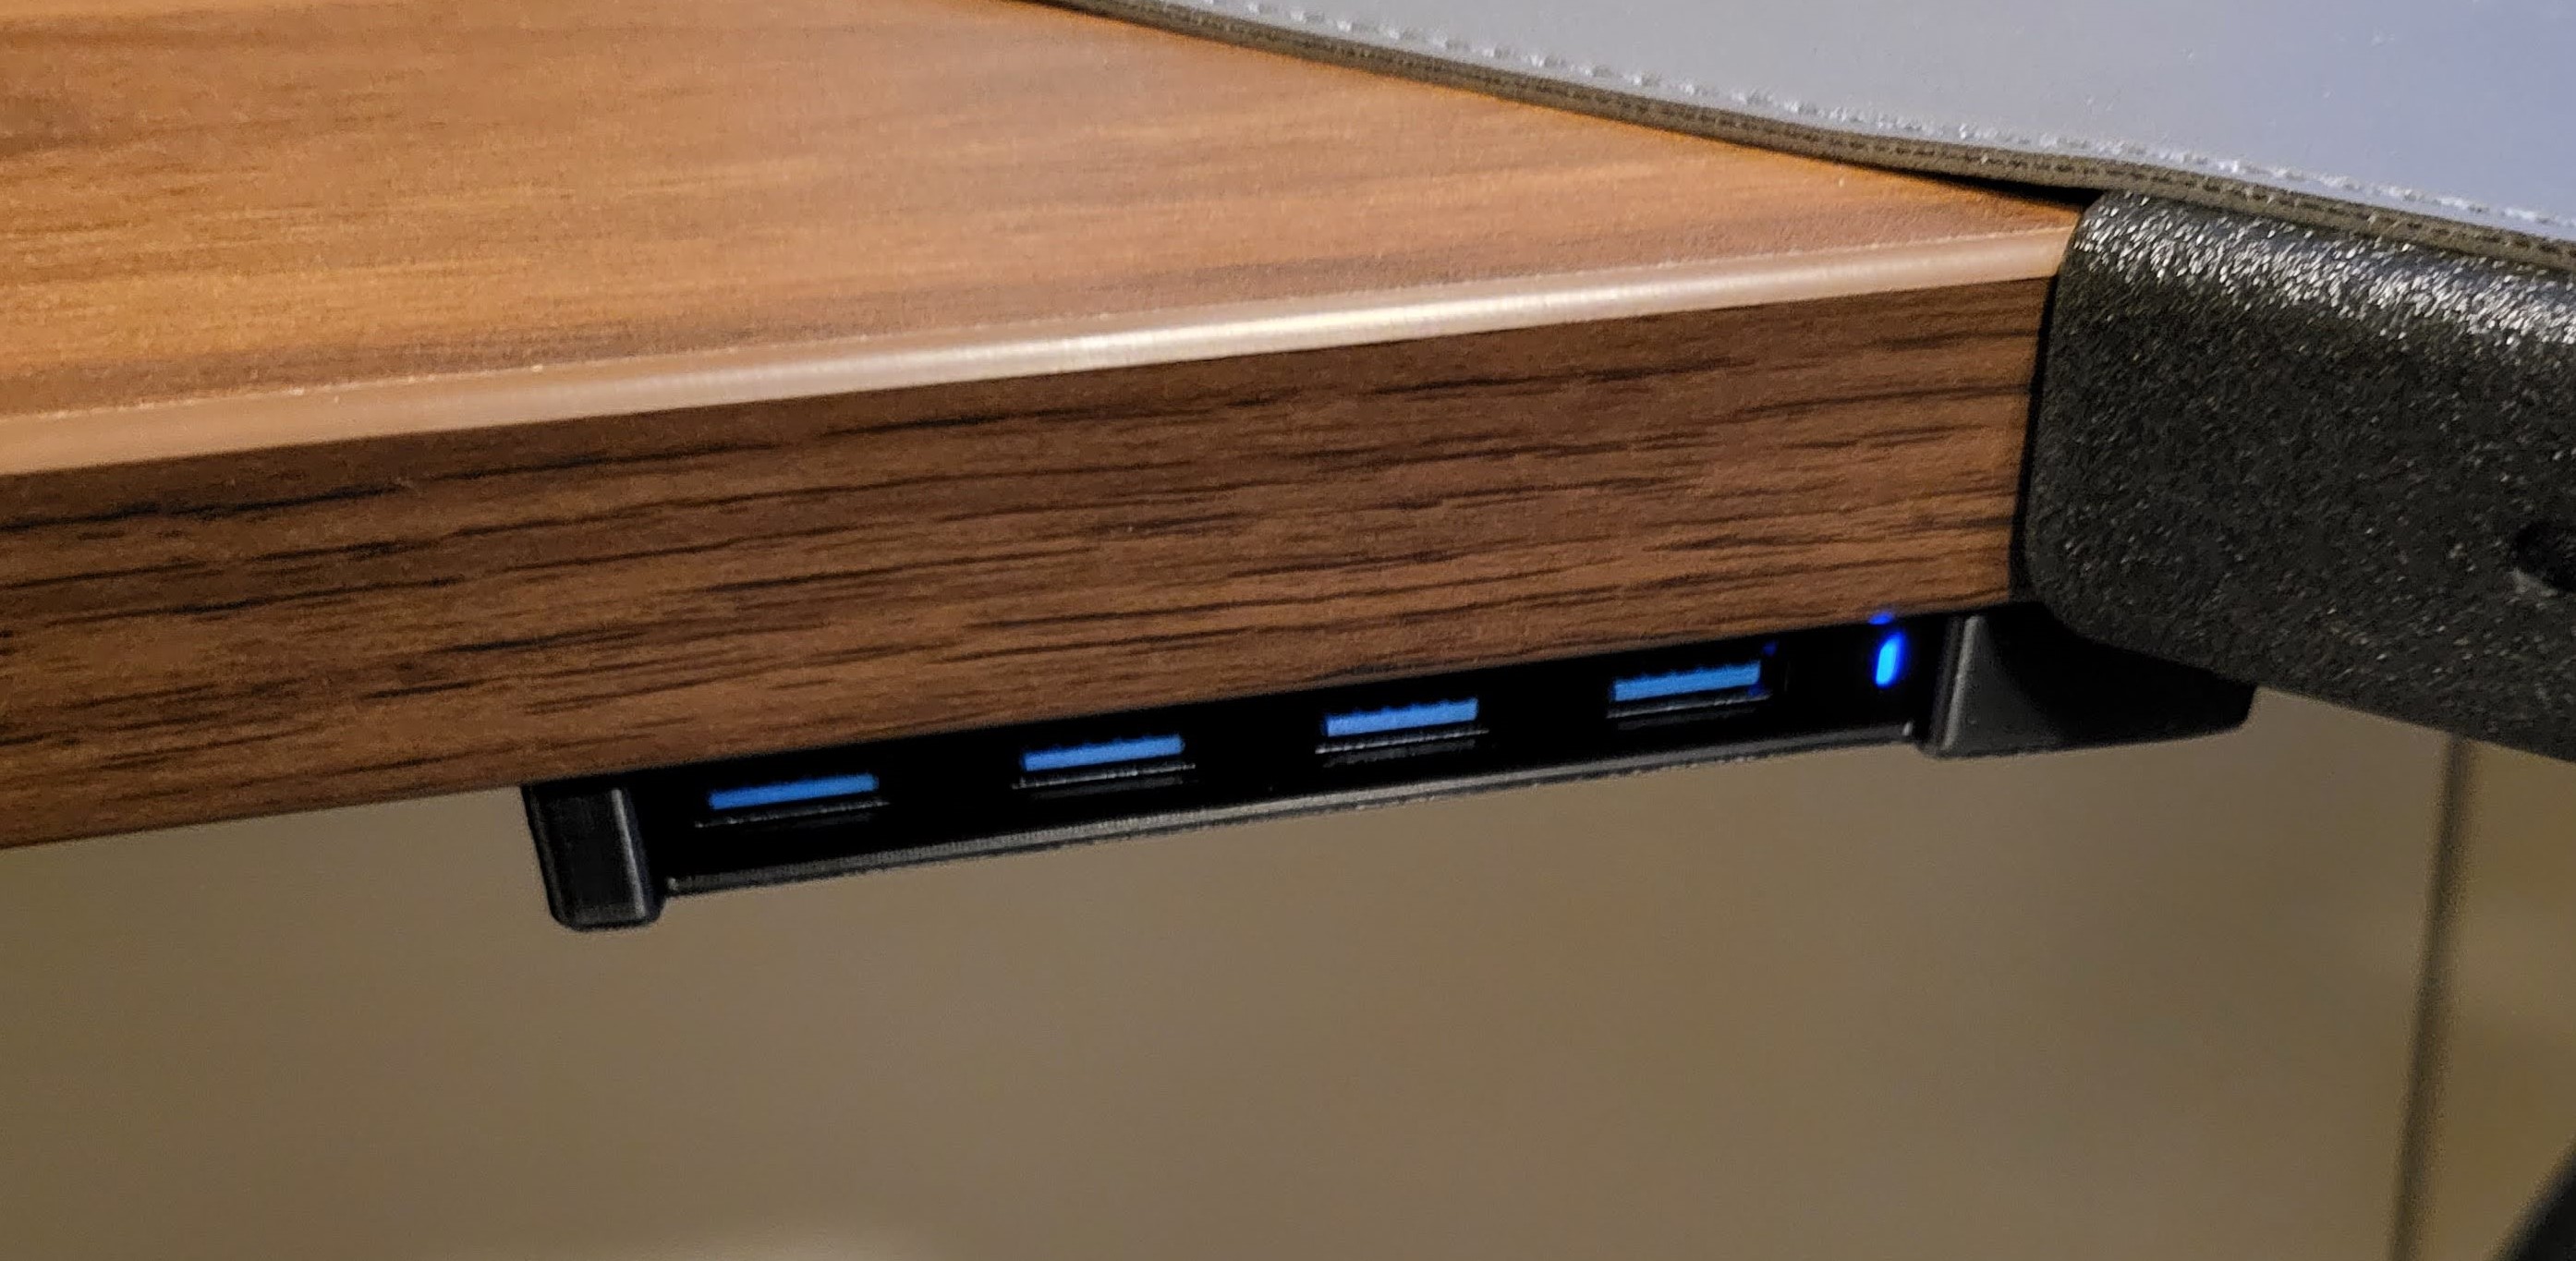 Anker 4 Port Ultra Slim USB Hub Under Desk Mount